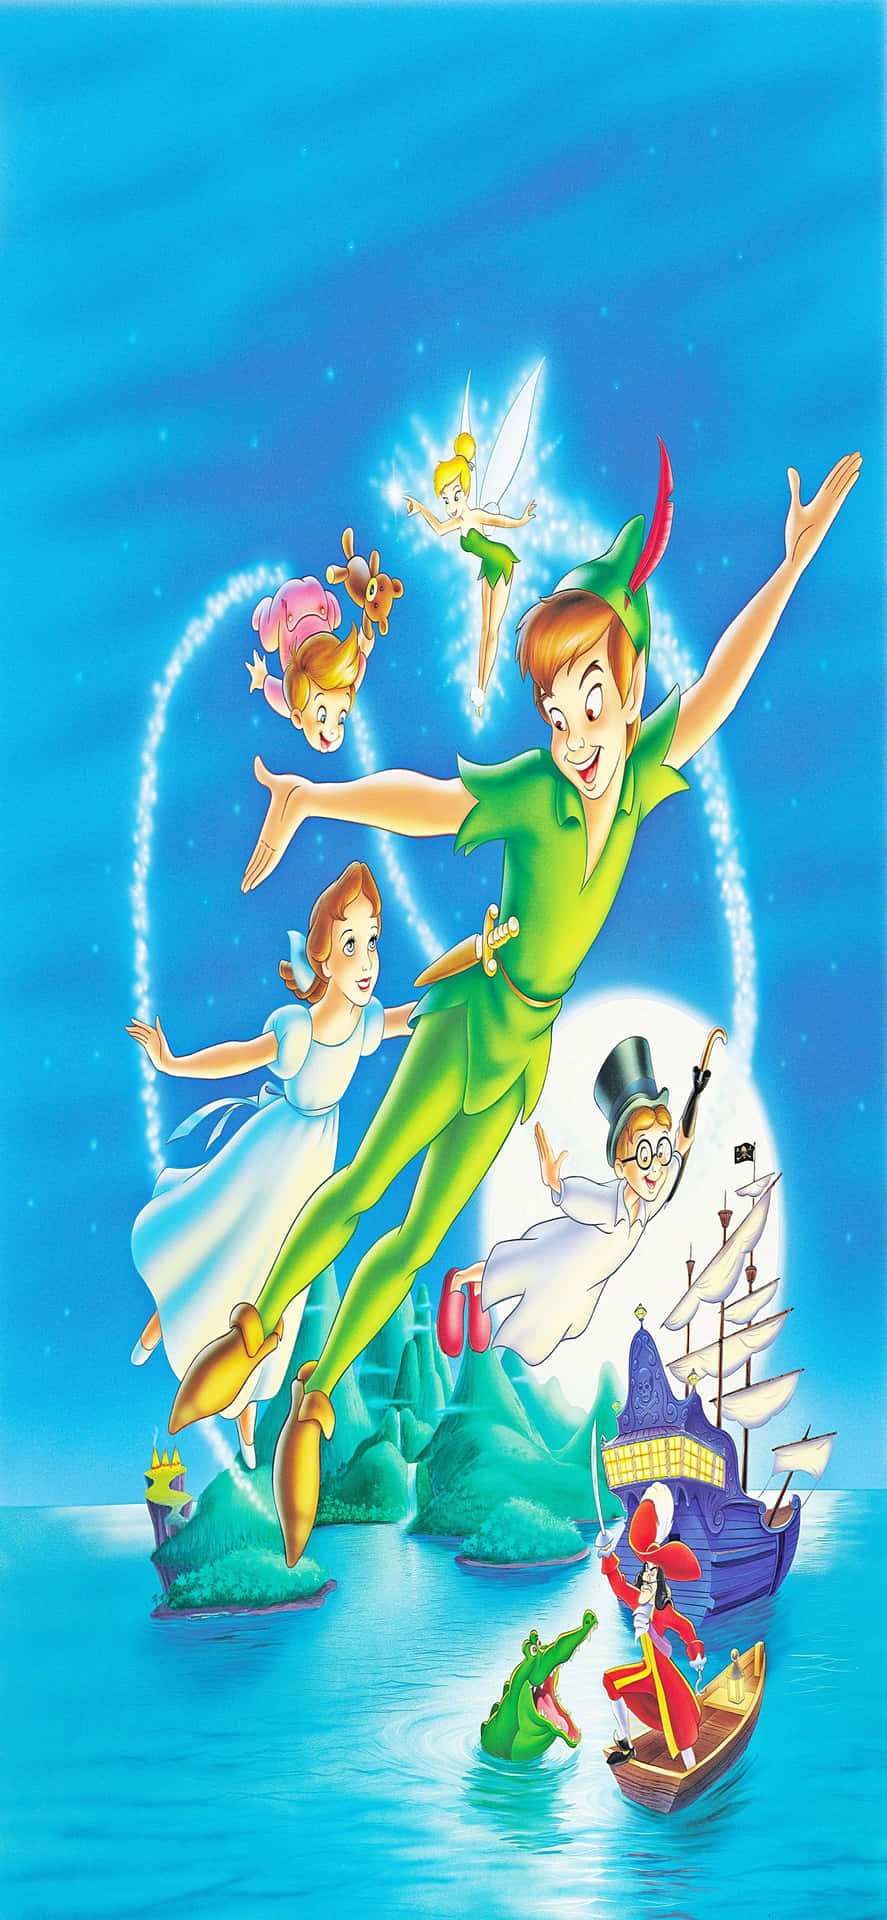 Fondode Pantalla Disney De Wendy Y Peter Pan Para Iphone X.